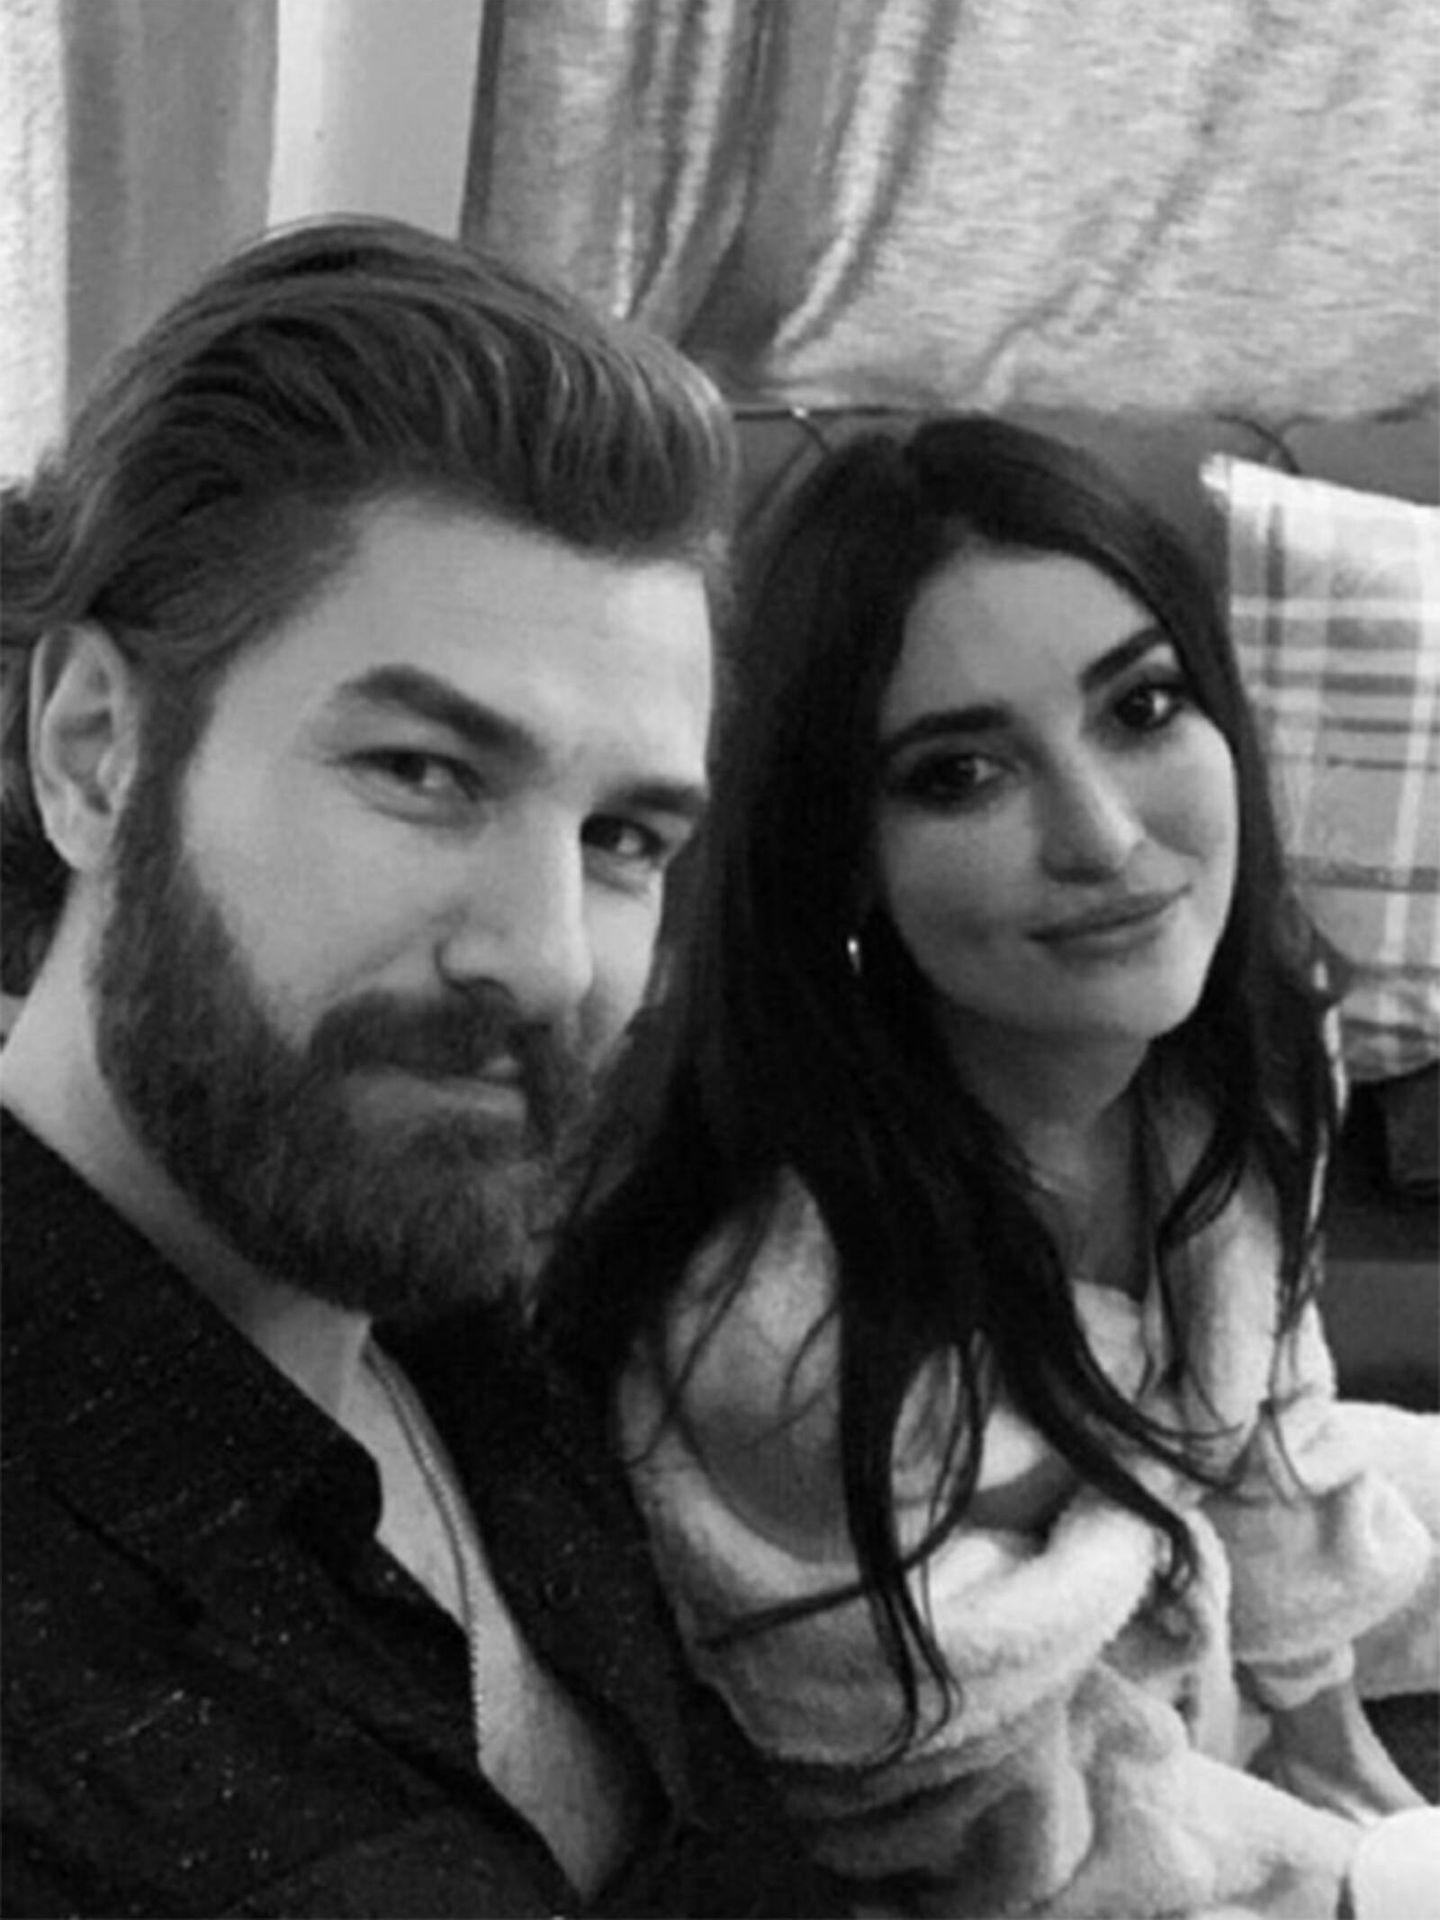 Furkan Palali y Melike Ipek Yalova posan en redes sociales. (Instagram @furkanpalali)